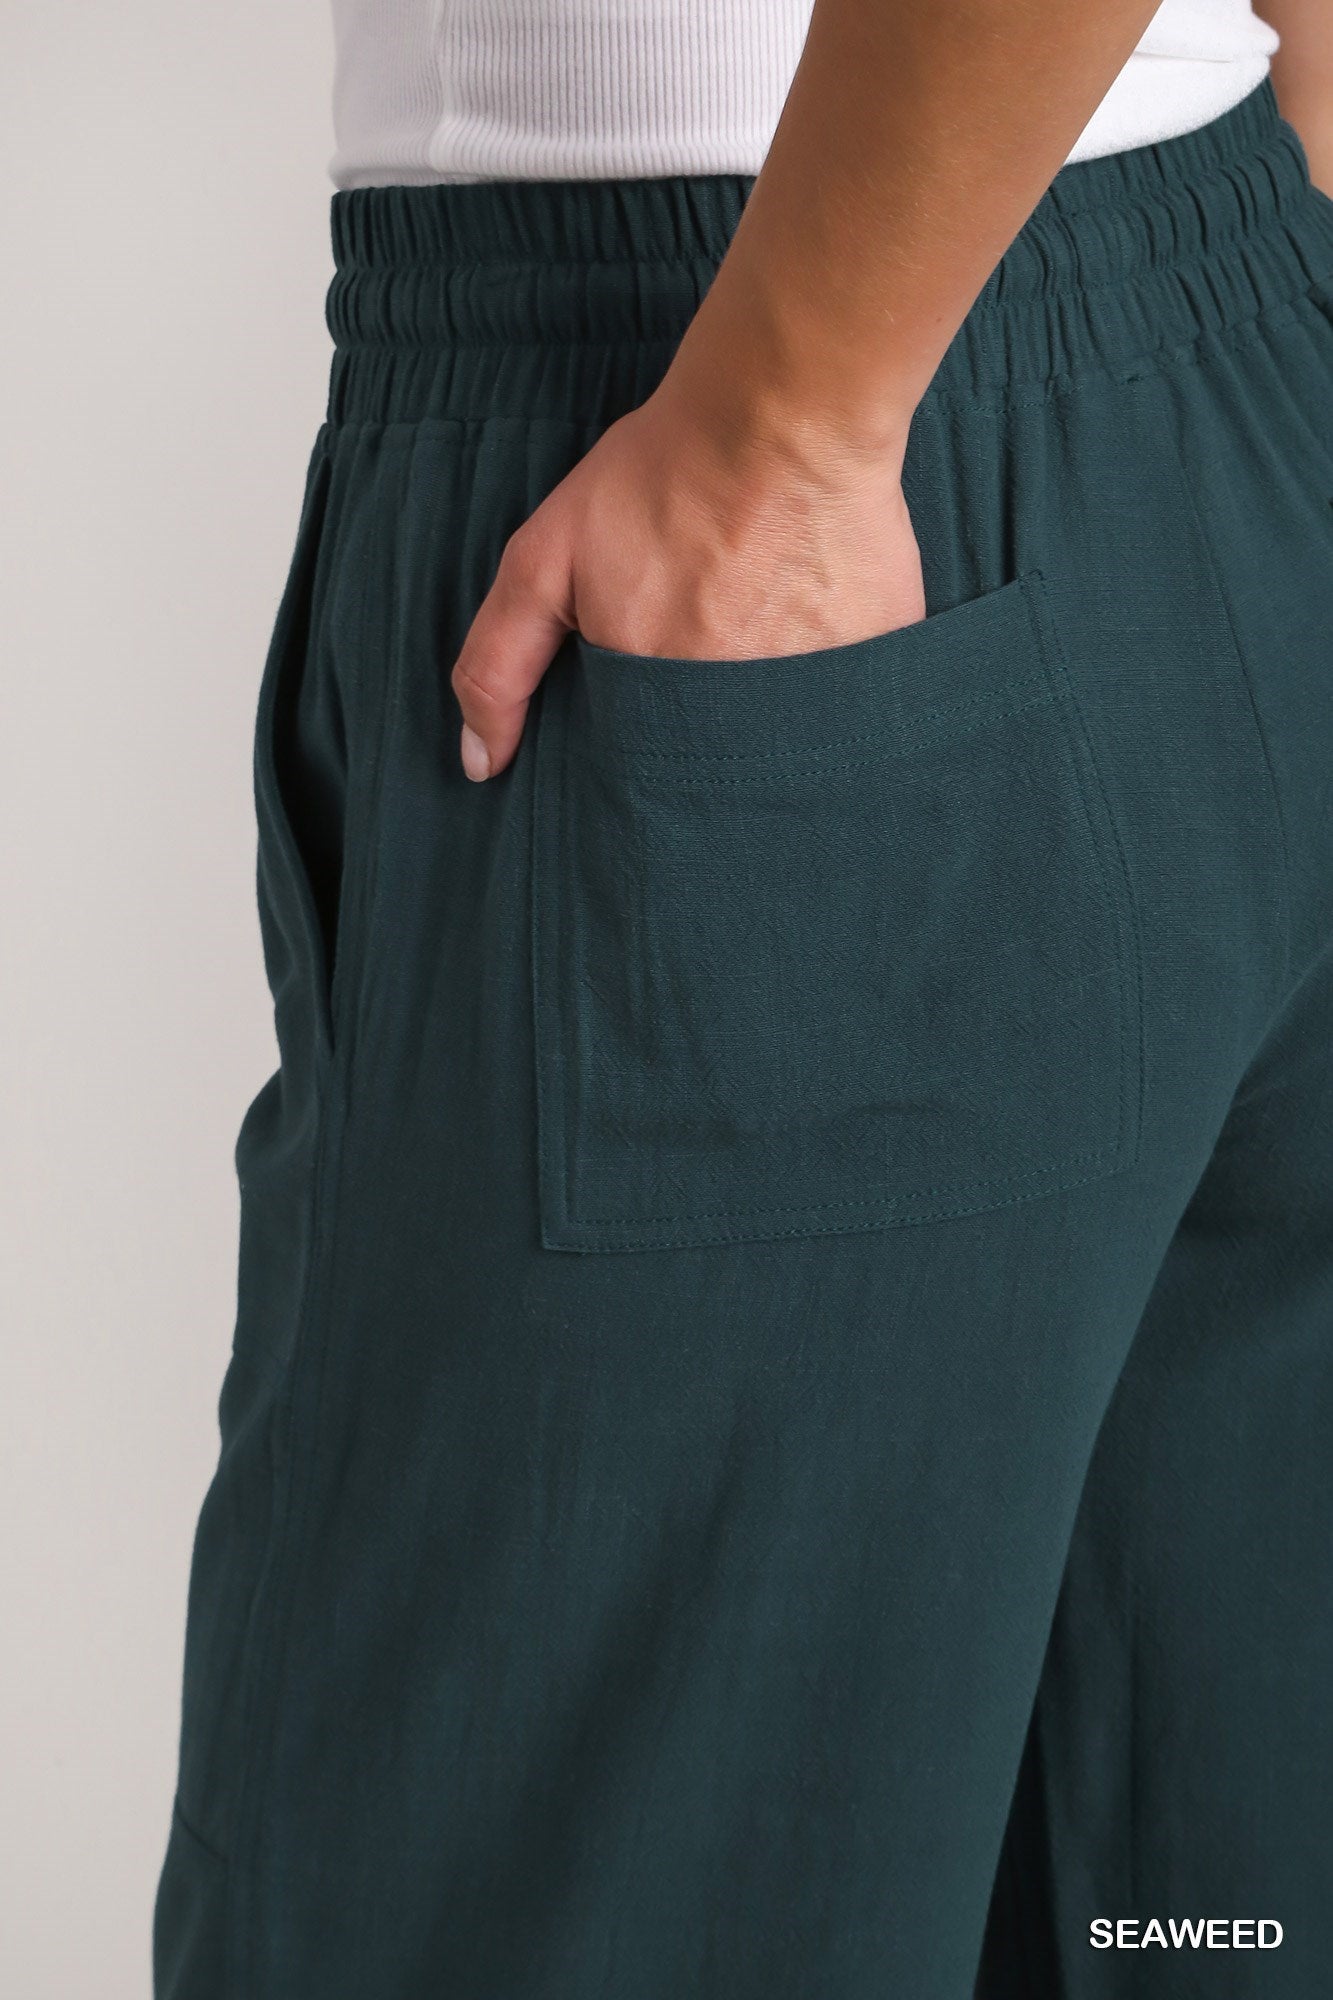 Sea Green Linen Blend Elastic Waistband Pants with Drawstring & Pocket Details